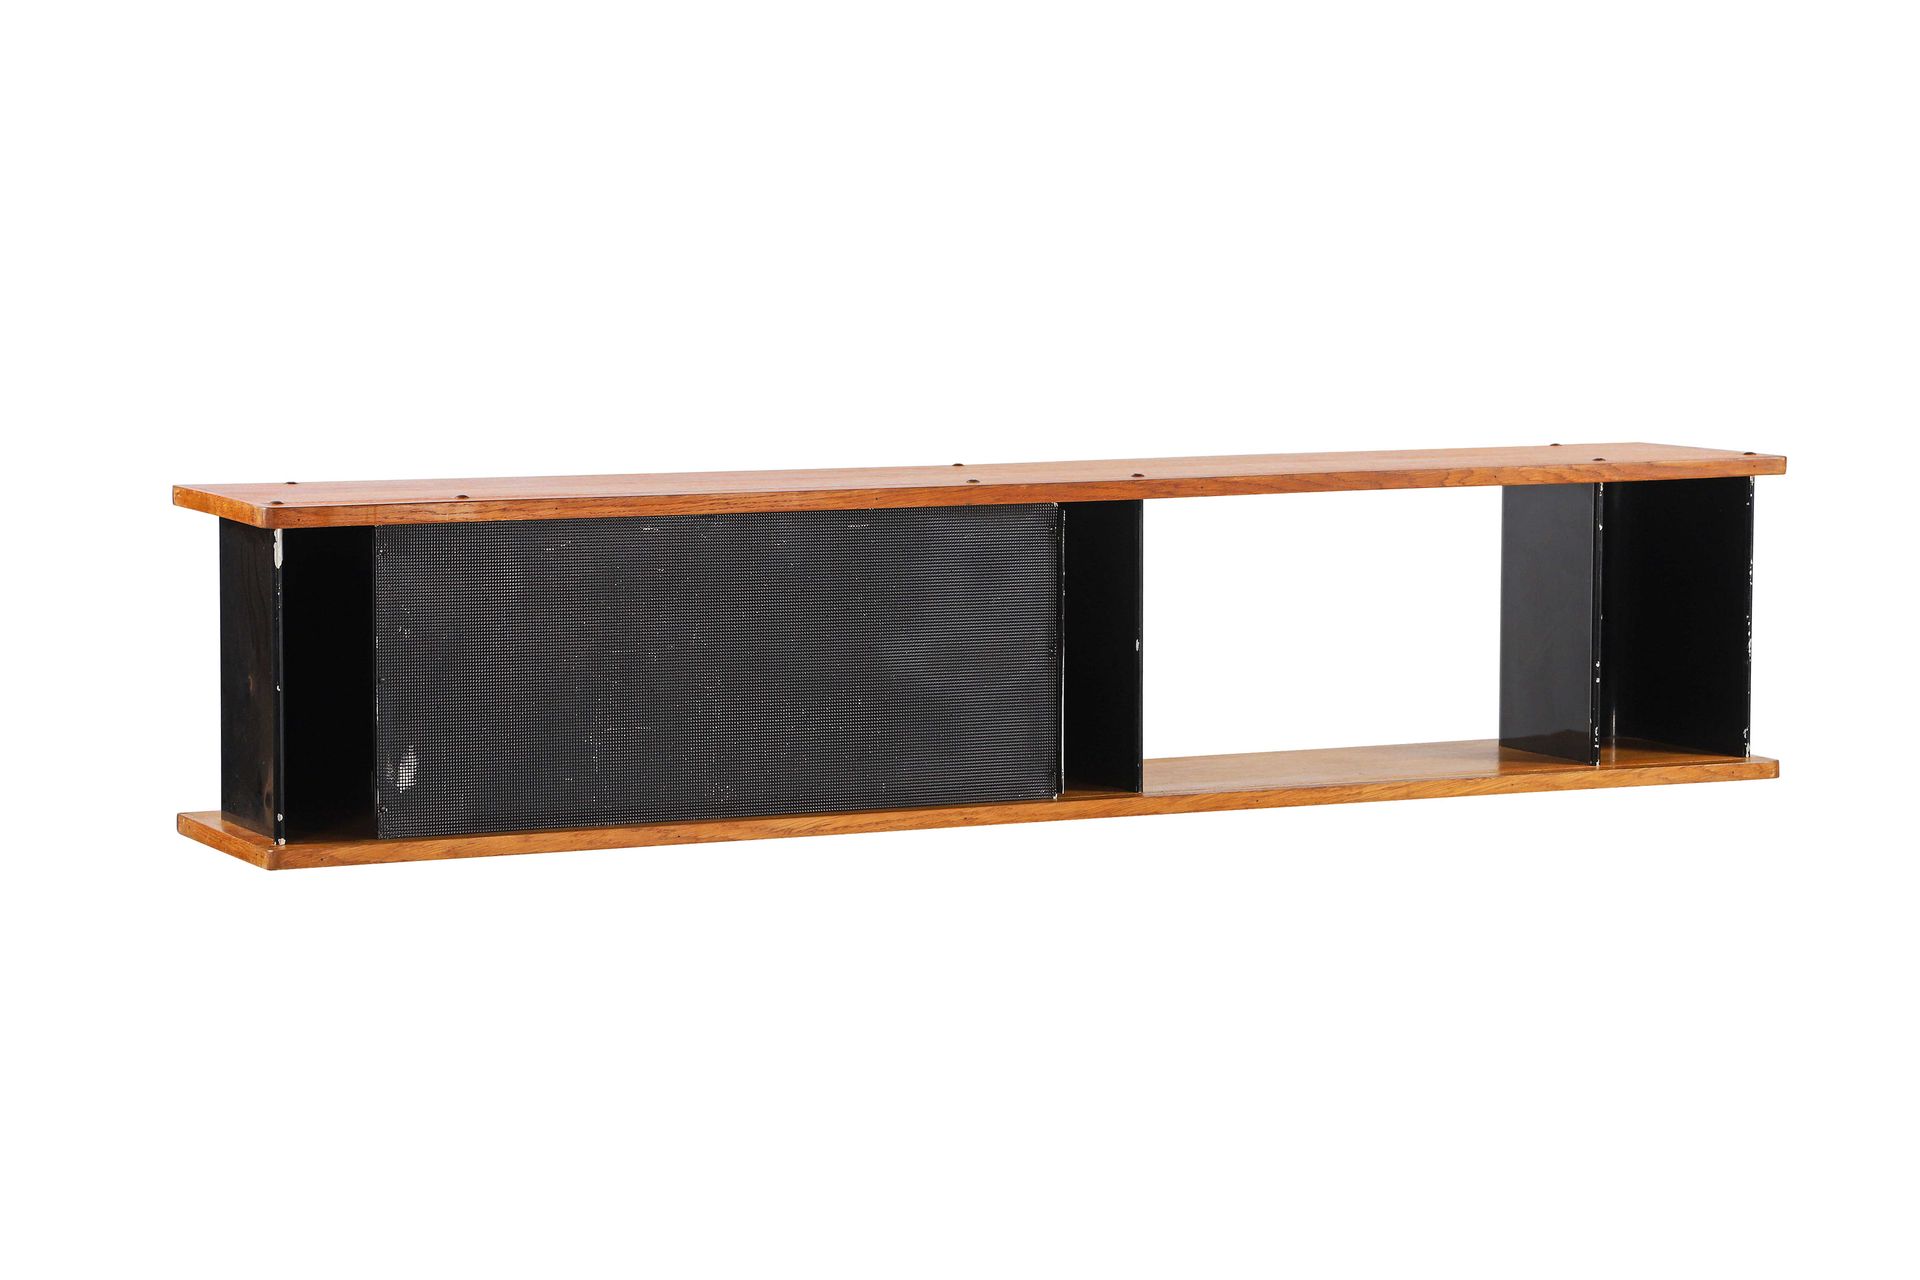 Null 夏洛特-佩里昂 (1903-1999)

橡木架，橡木方块，铝，金属 37.5 x 183 x 33 厘米。斯蒂芬-西蒙，约1958年

壁挂式书架 &hellip;